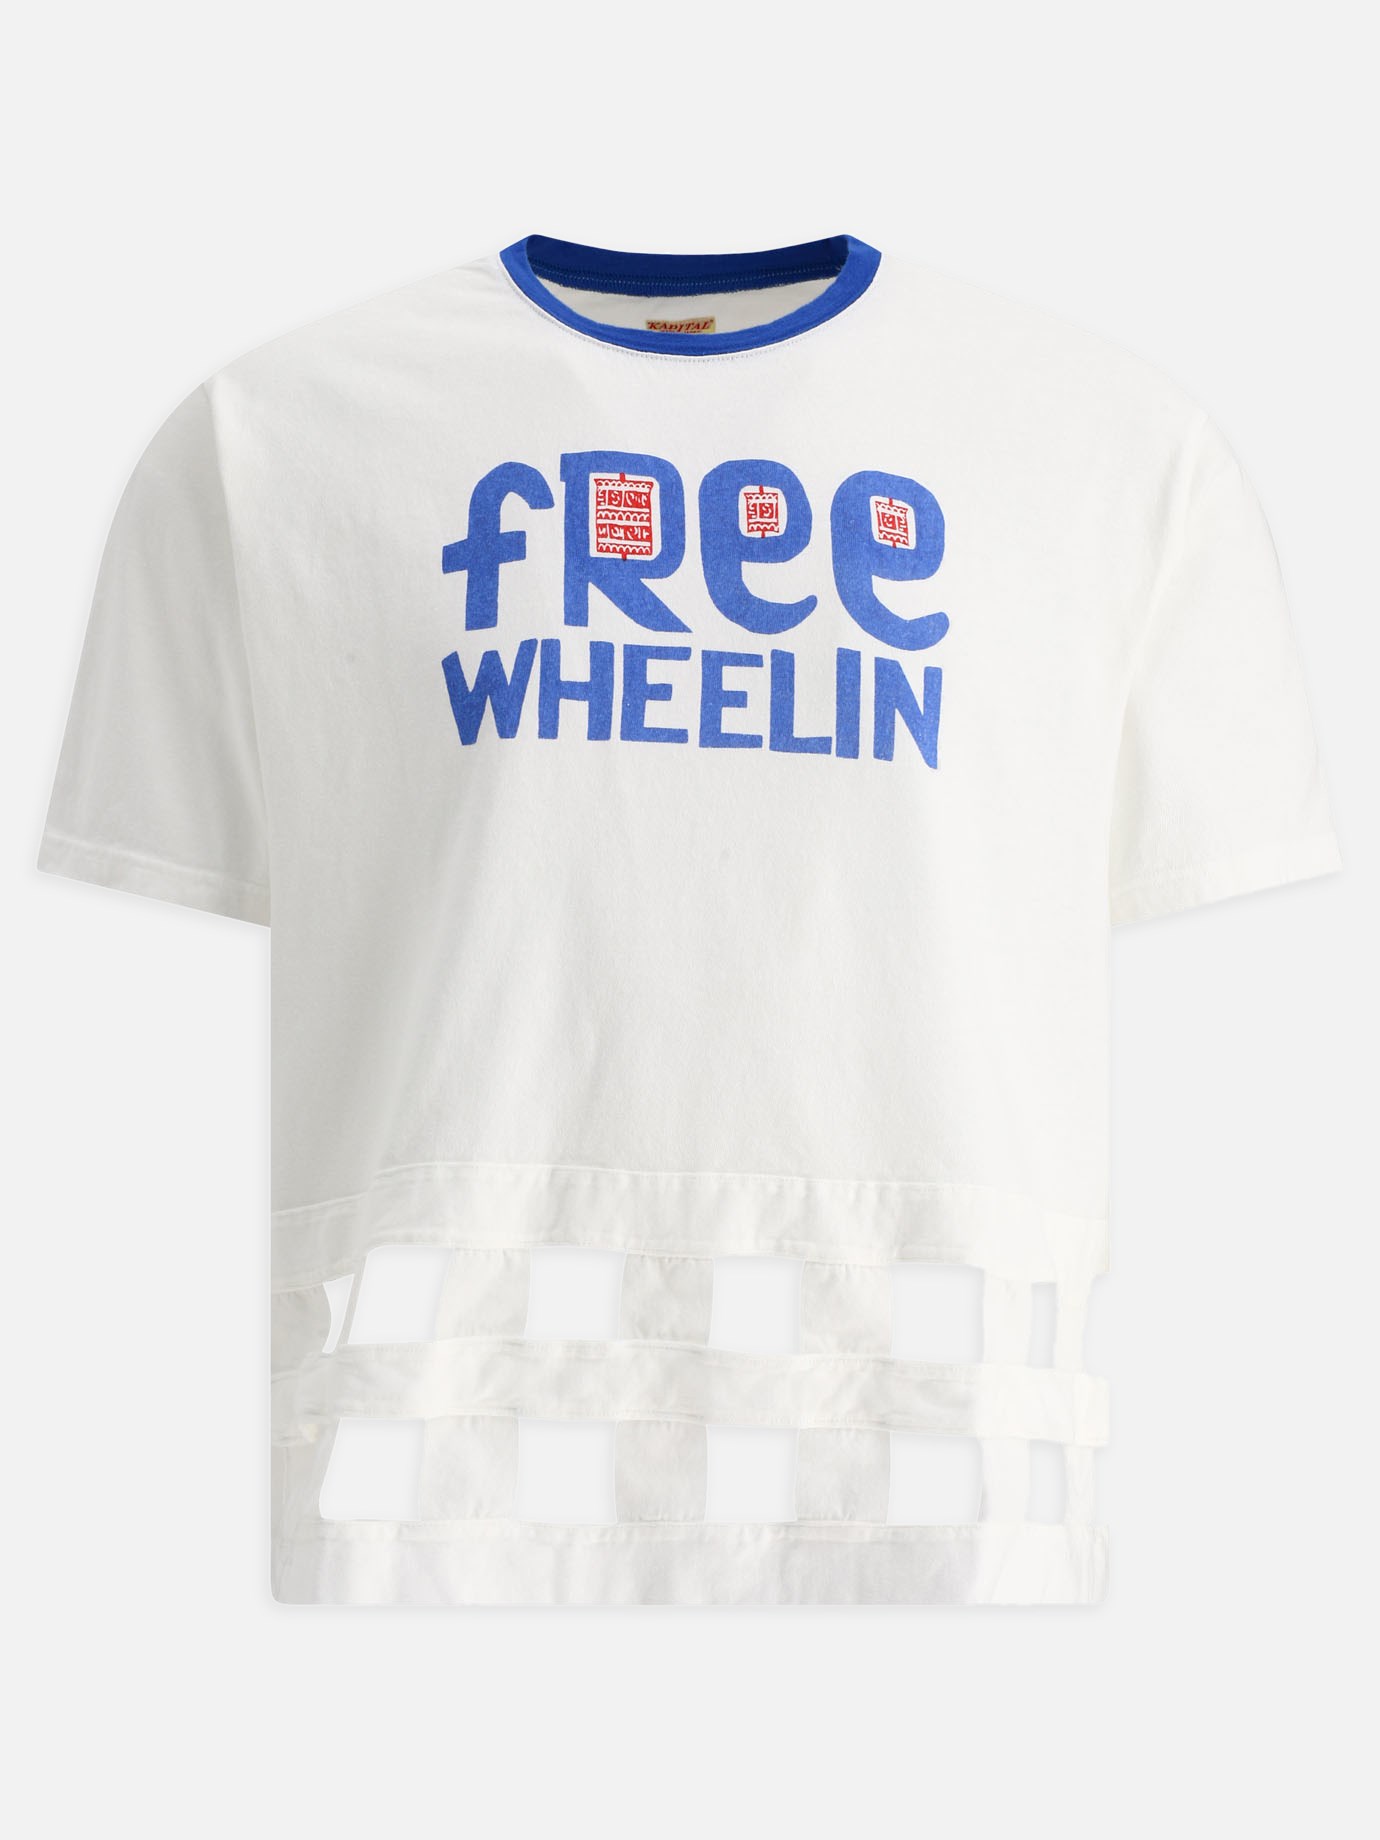  Free Wheelin  t-shirtby Kapital - 3